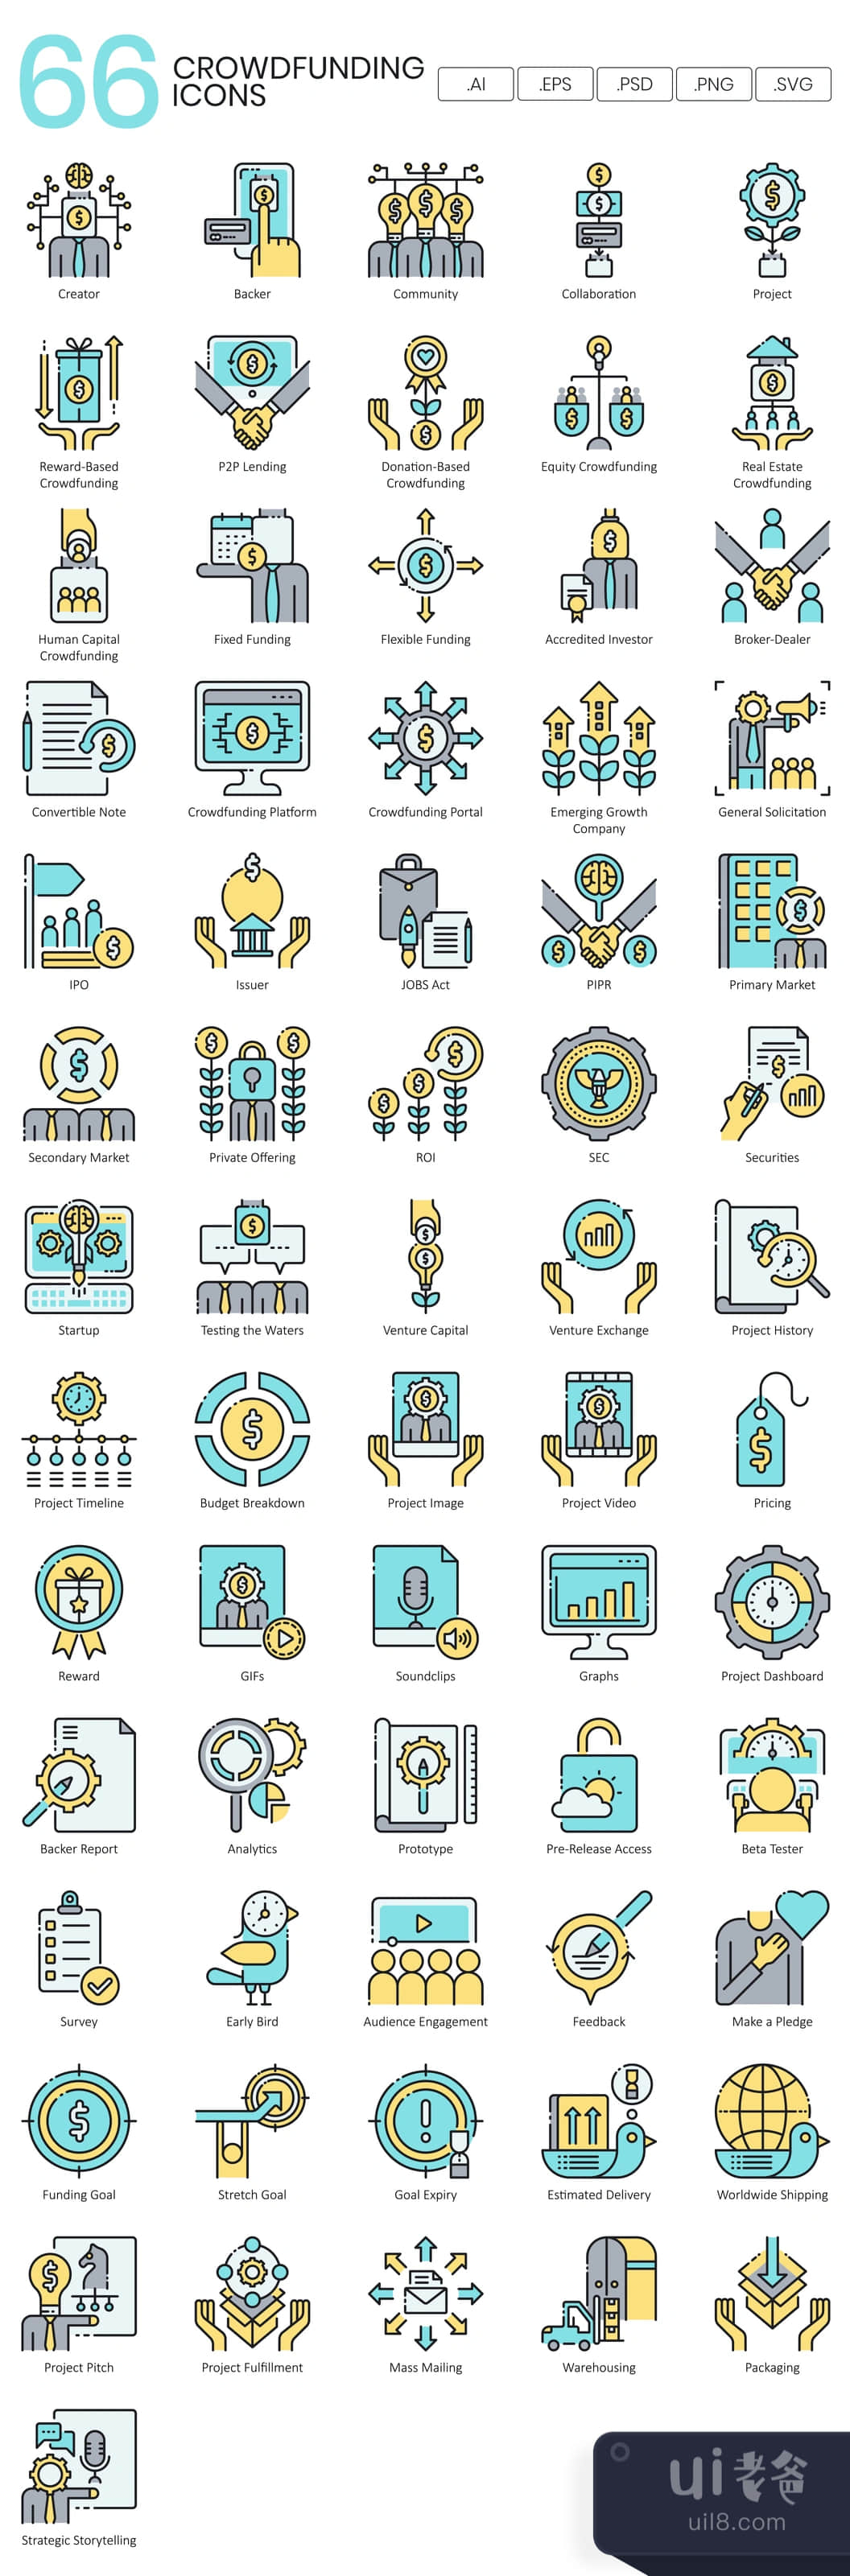 66个众筹图标 (66 Crowdfunding Icons)插图